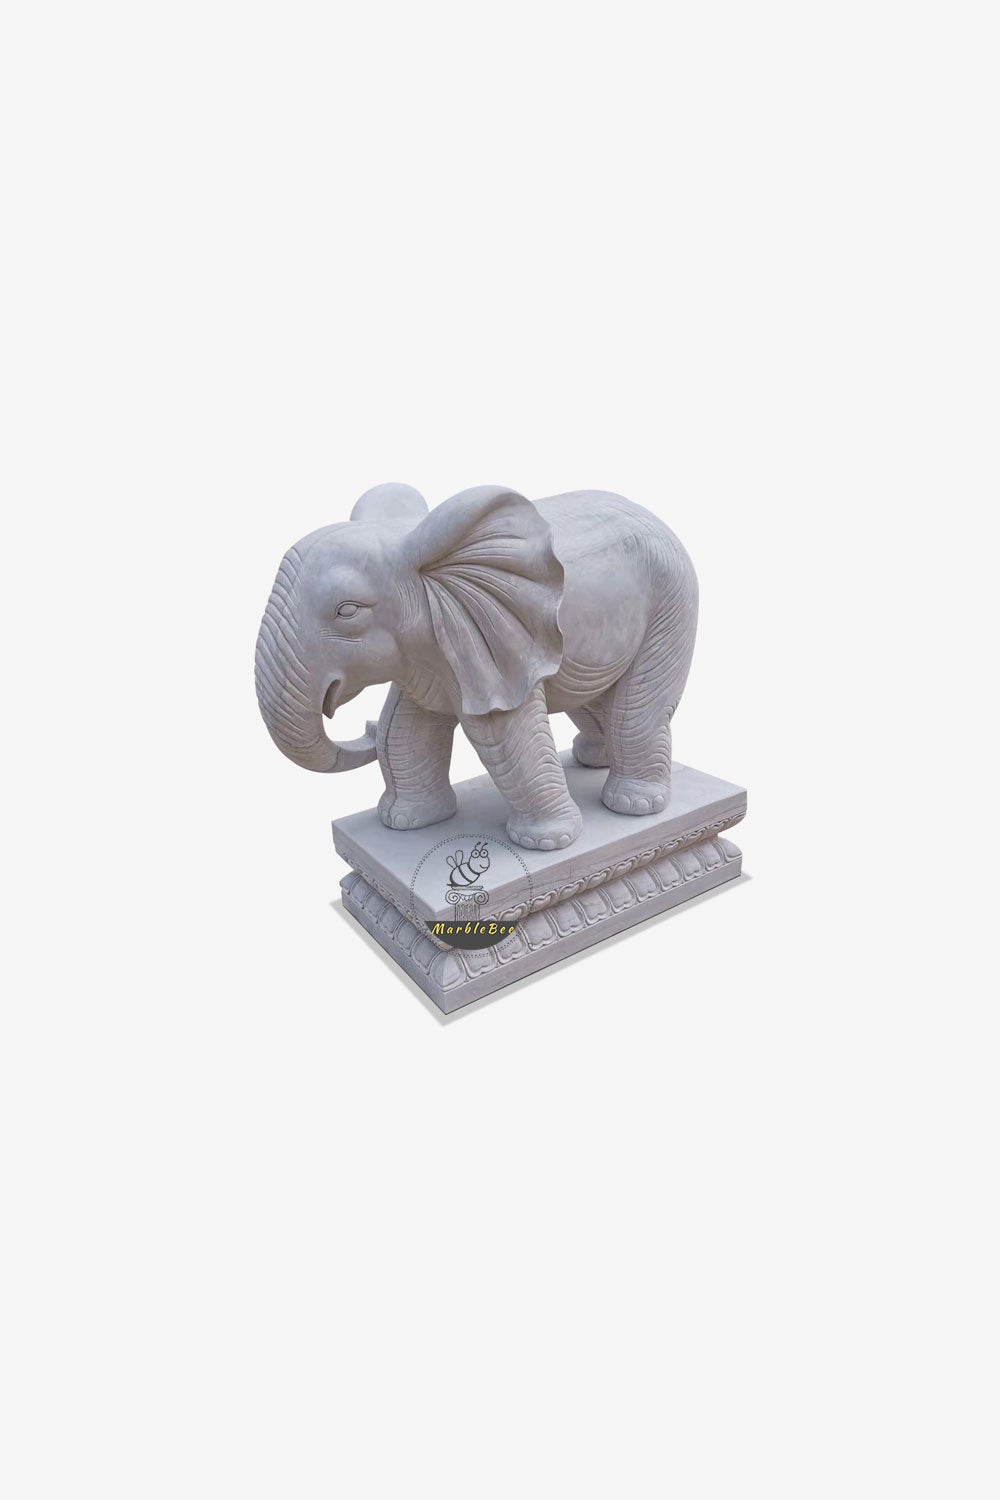 Elephant Stone Sculptures for Garden